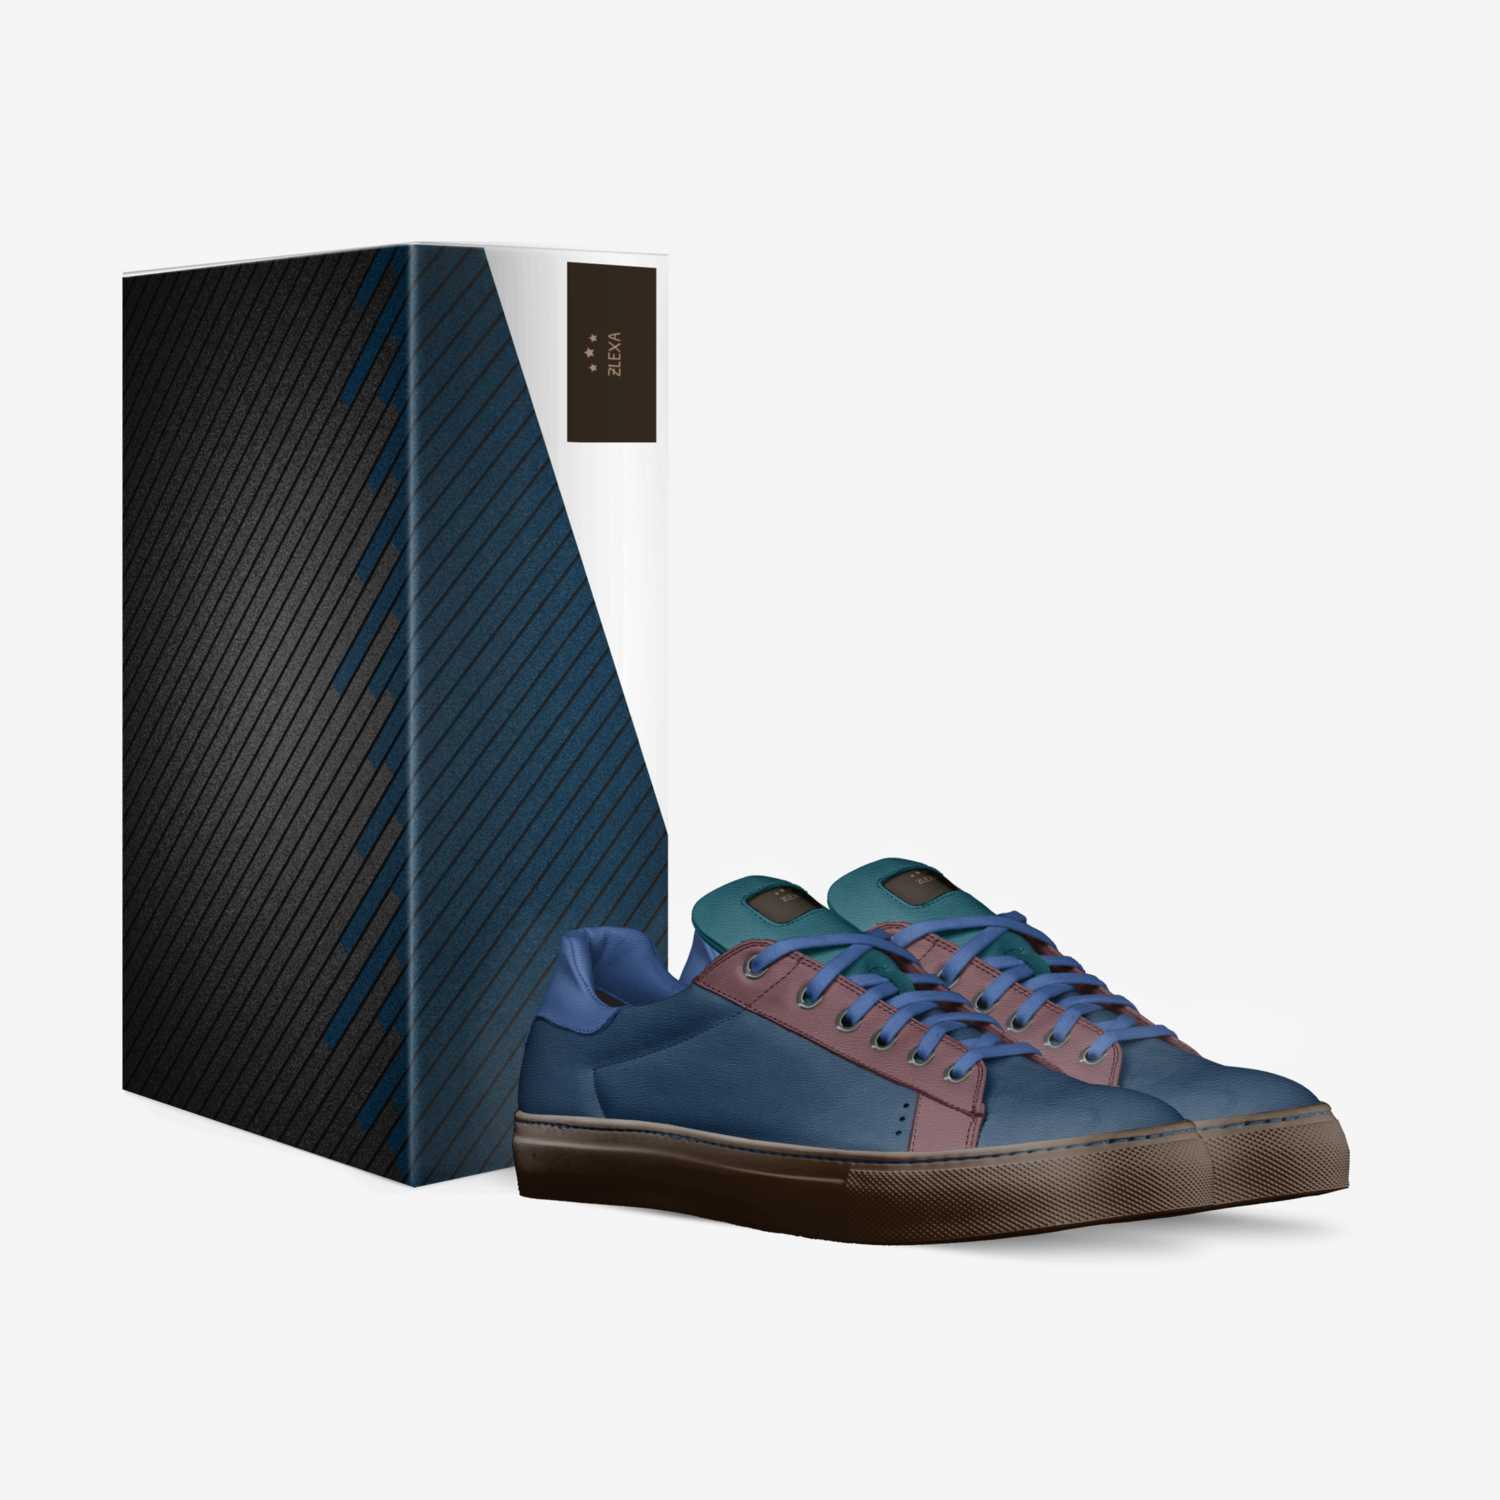 Zlexa custom made in Italy shoes by Mohamed Ahmed Mahmoud | Box view